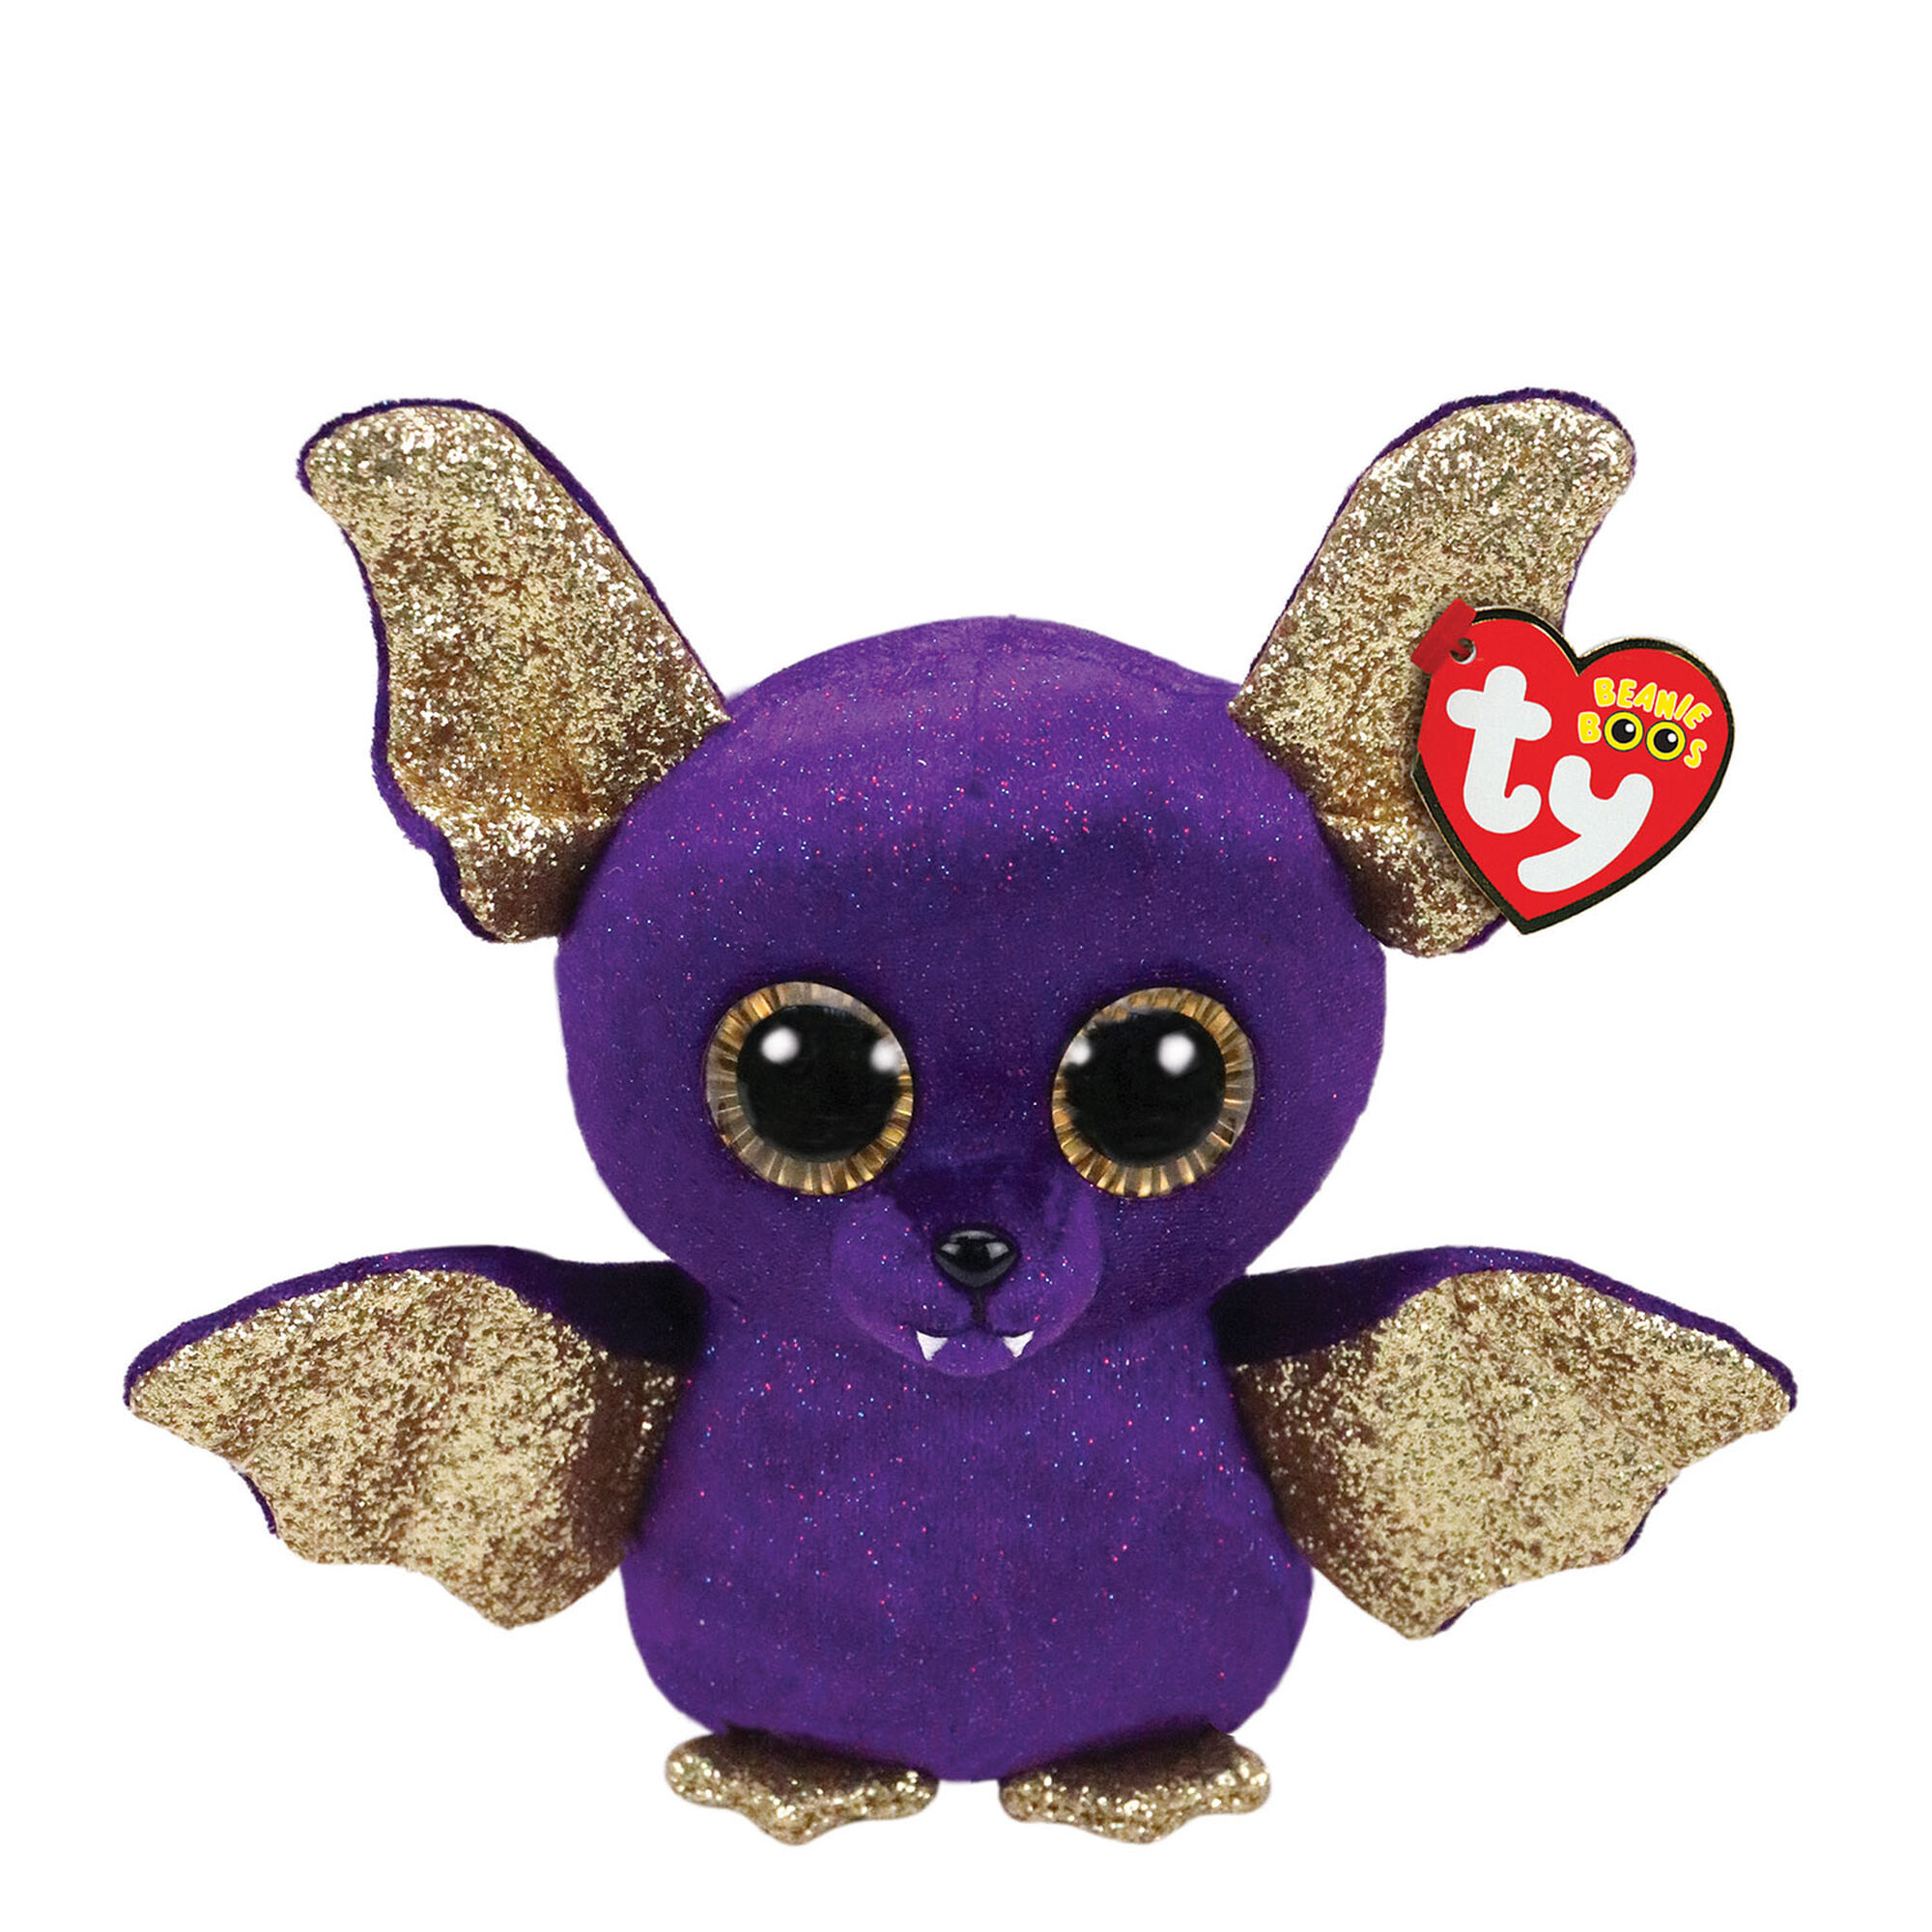 Ty Beanie Boos Big Eyes 6" SOFT Plush Black Bat Animal Toys 